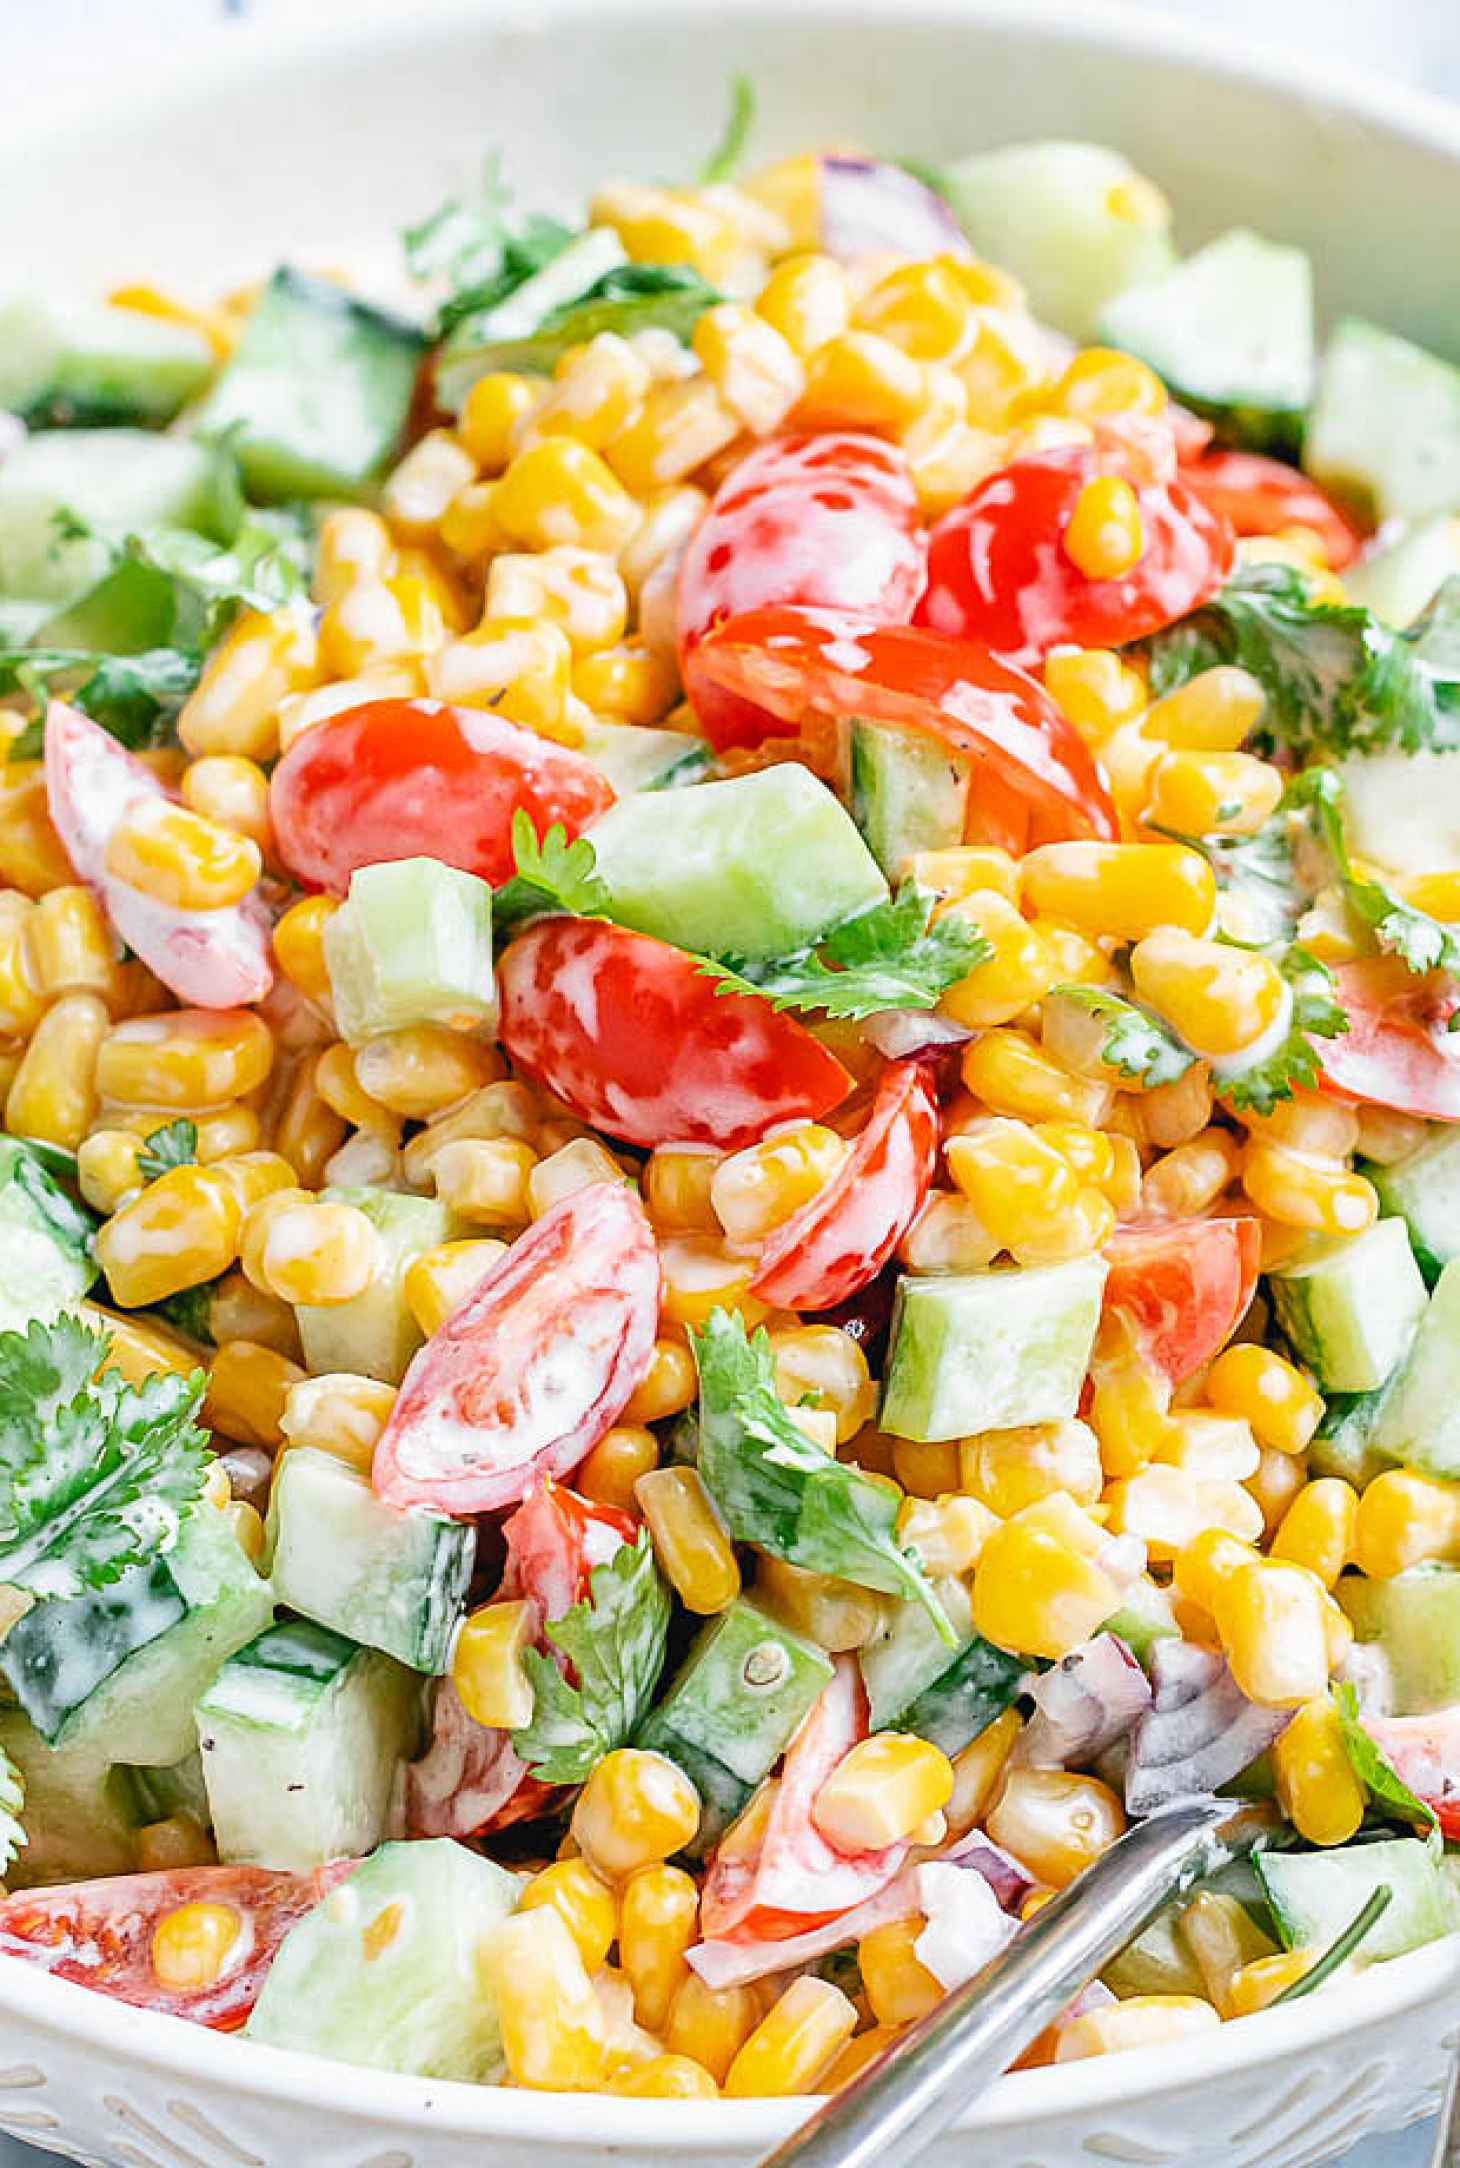 Creamy Corn Salad - #recipe by #eatwell101 - https://www.eatwell101.com/creamy-corn-salad-recipe